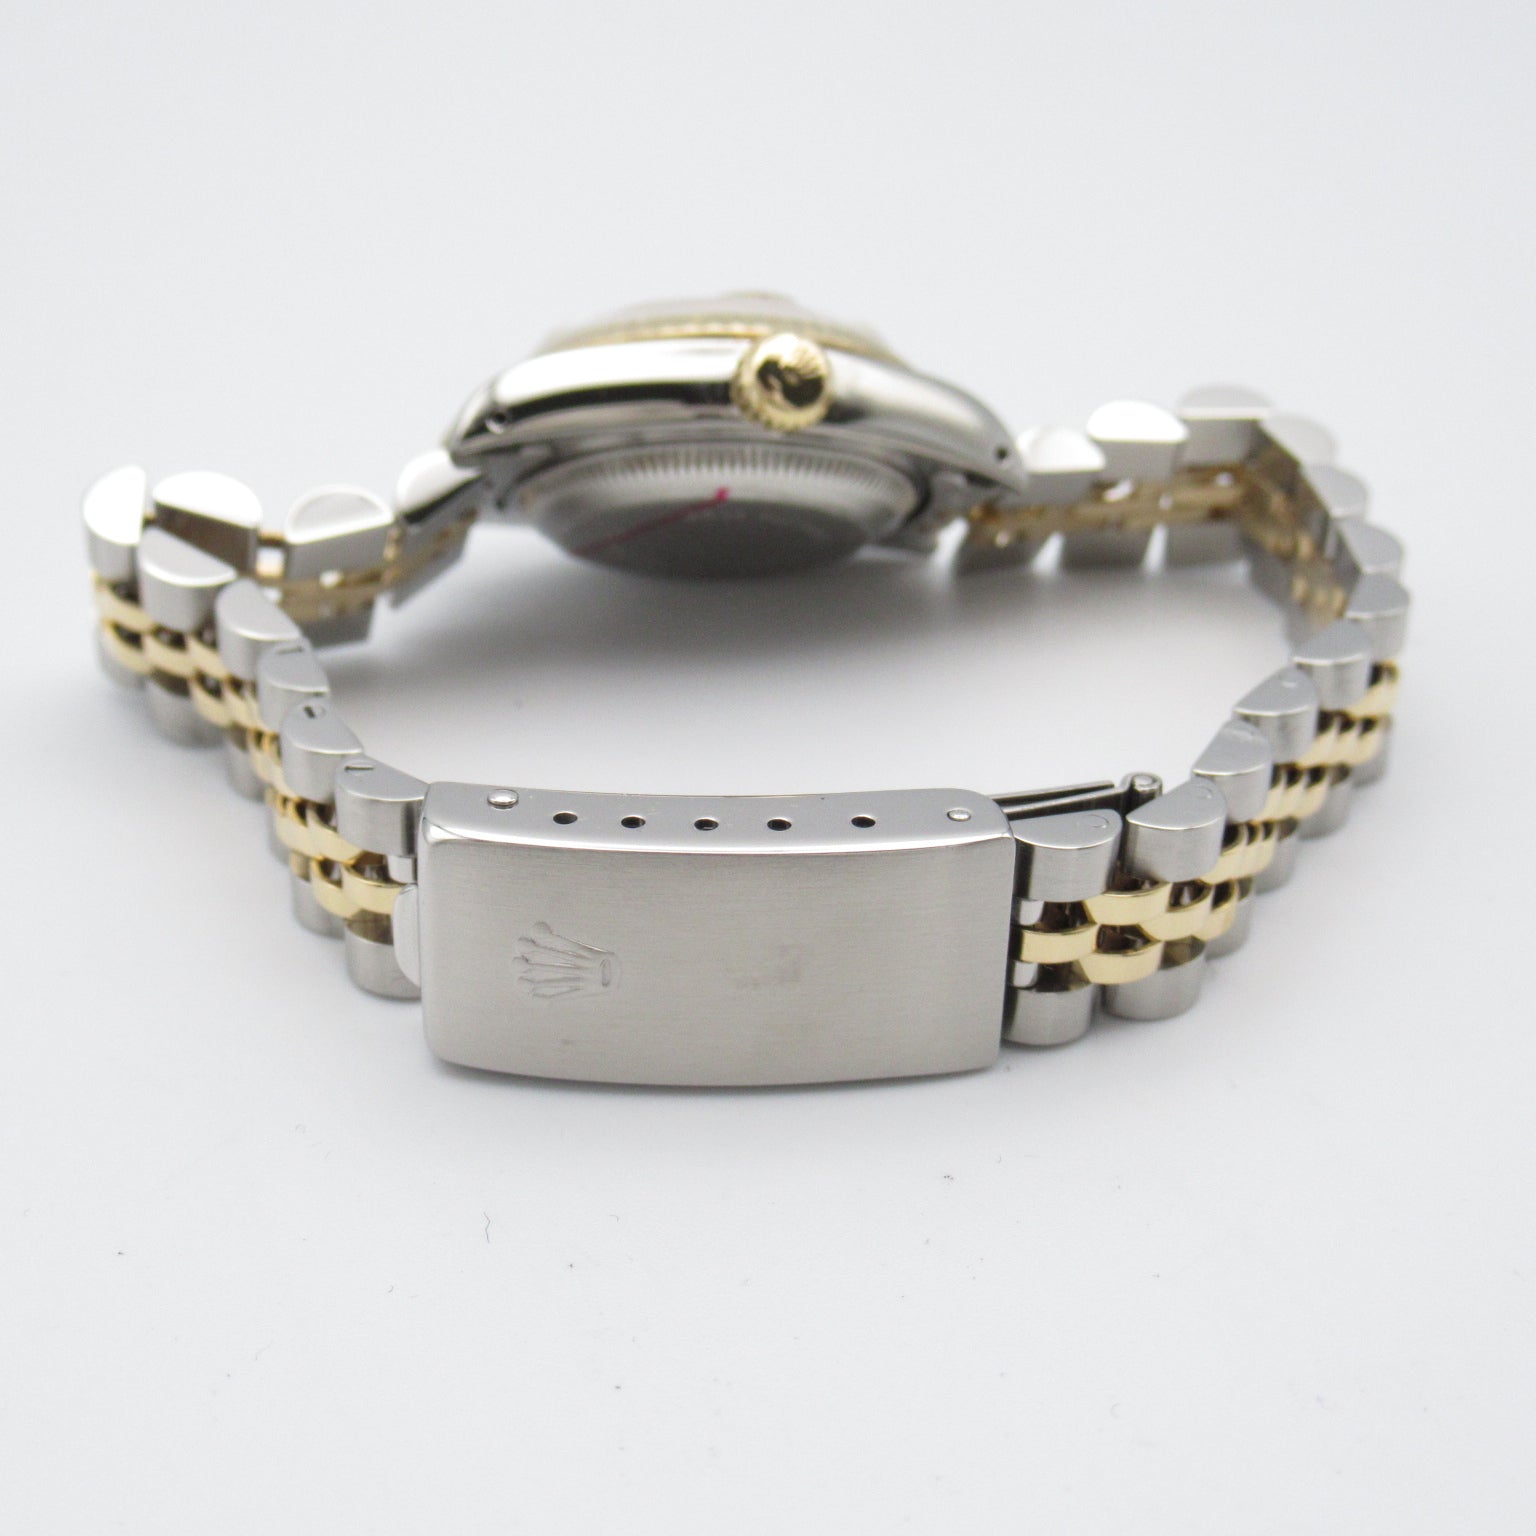 Rolex Rolex Datejust Watch K18 (Yellow G) Stainless Steel  Gold  CH/BA 69173